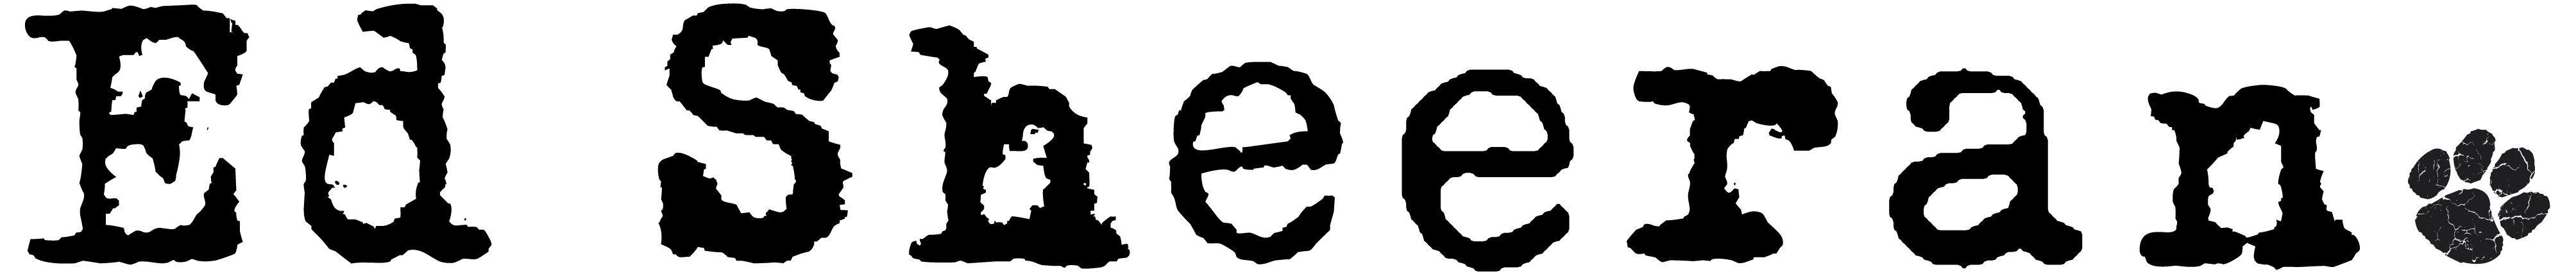 Ed Sheeran Black and White Logo - Ed Sheeran logo | Bullet Journal | Pinterest | Ed Sheeran, Band ...